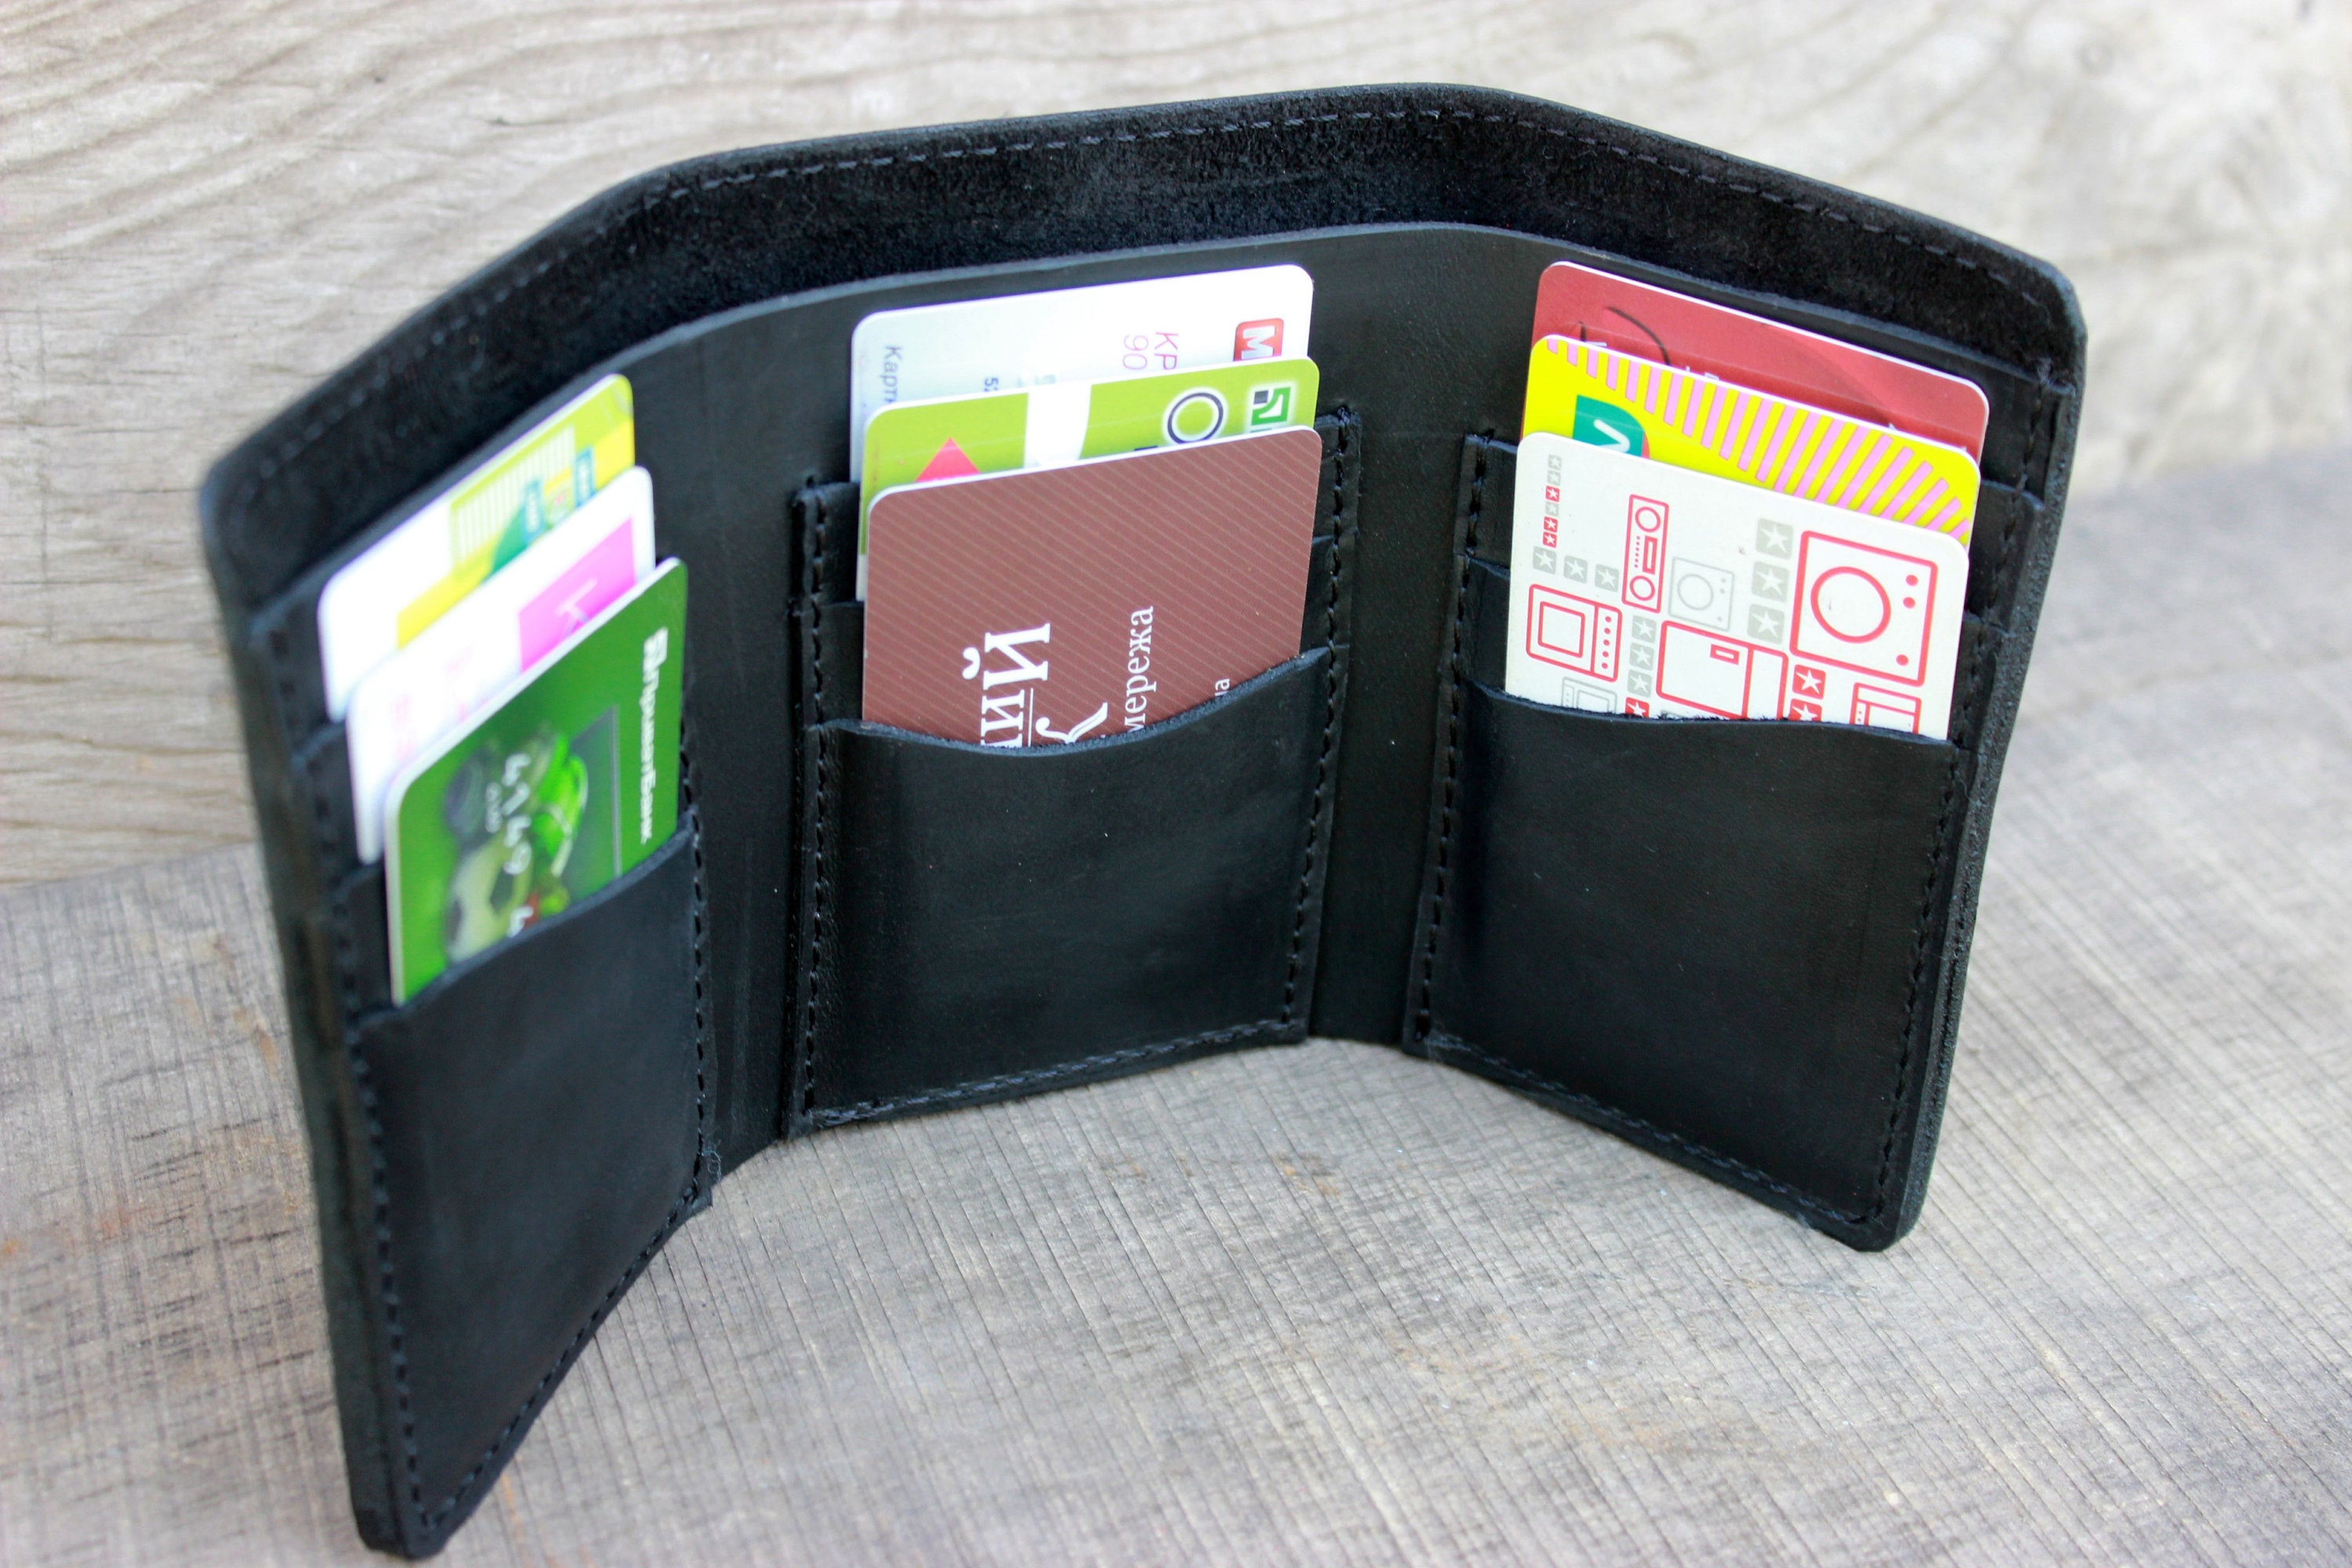 Kroo Multi Card Minimalist Slim Bifold Leather Men Travel Wallet Pocket Holder, Best Mens Wallets for Cash Money, ID, Credit Cards, Men's, Gray